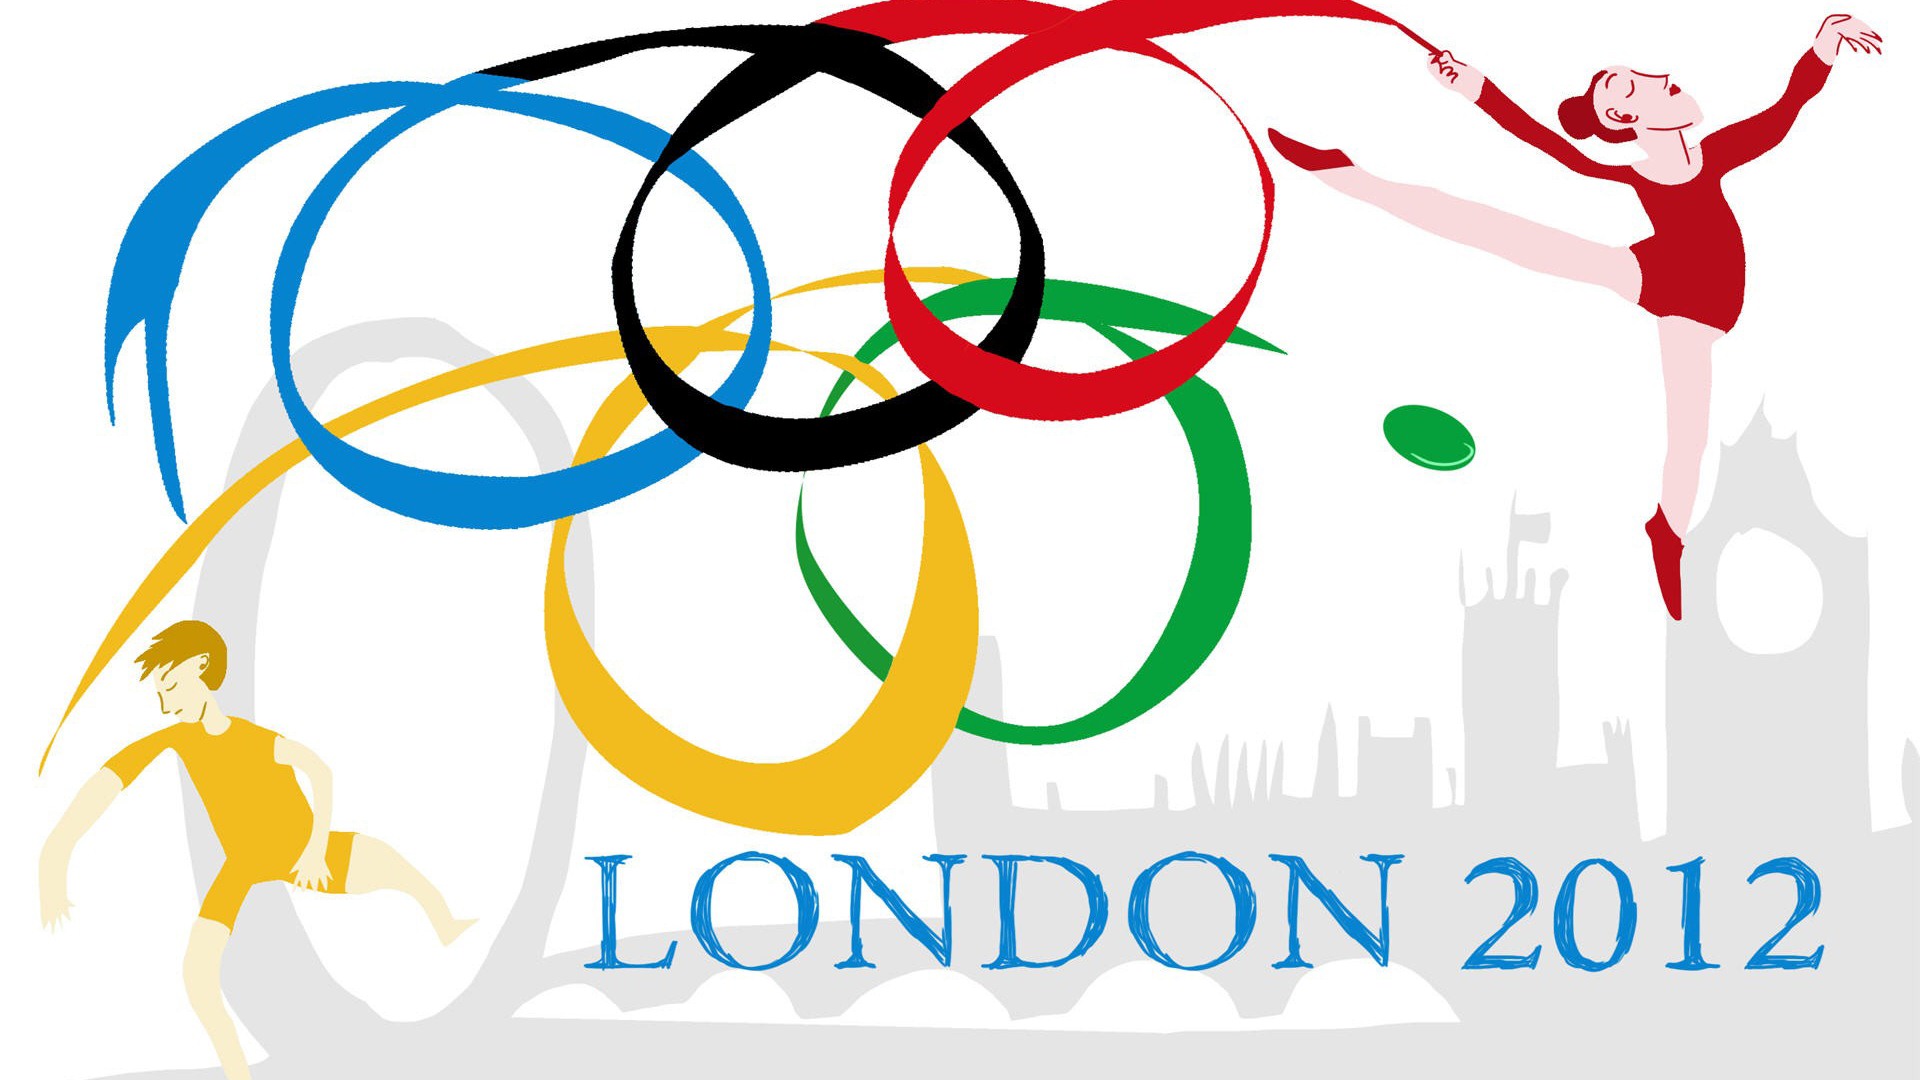 London 2012 Olympics theme wallpapers (2) #16 - 1920x1080